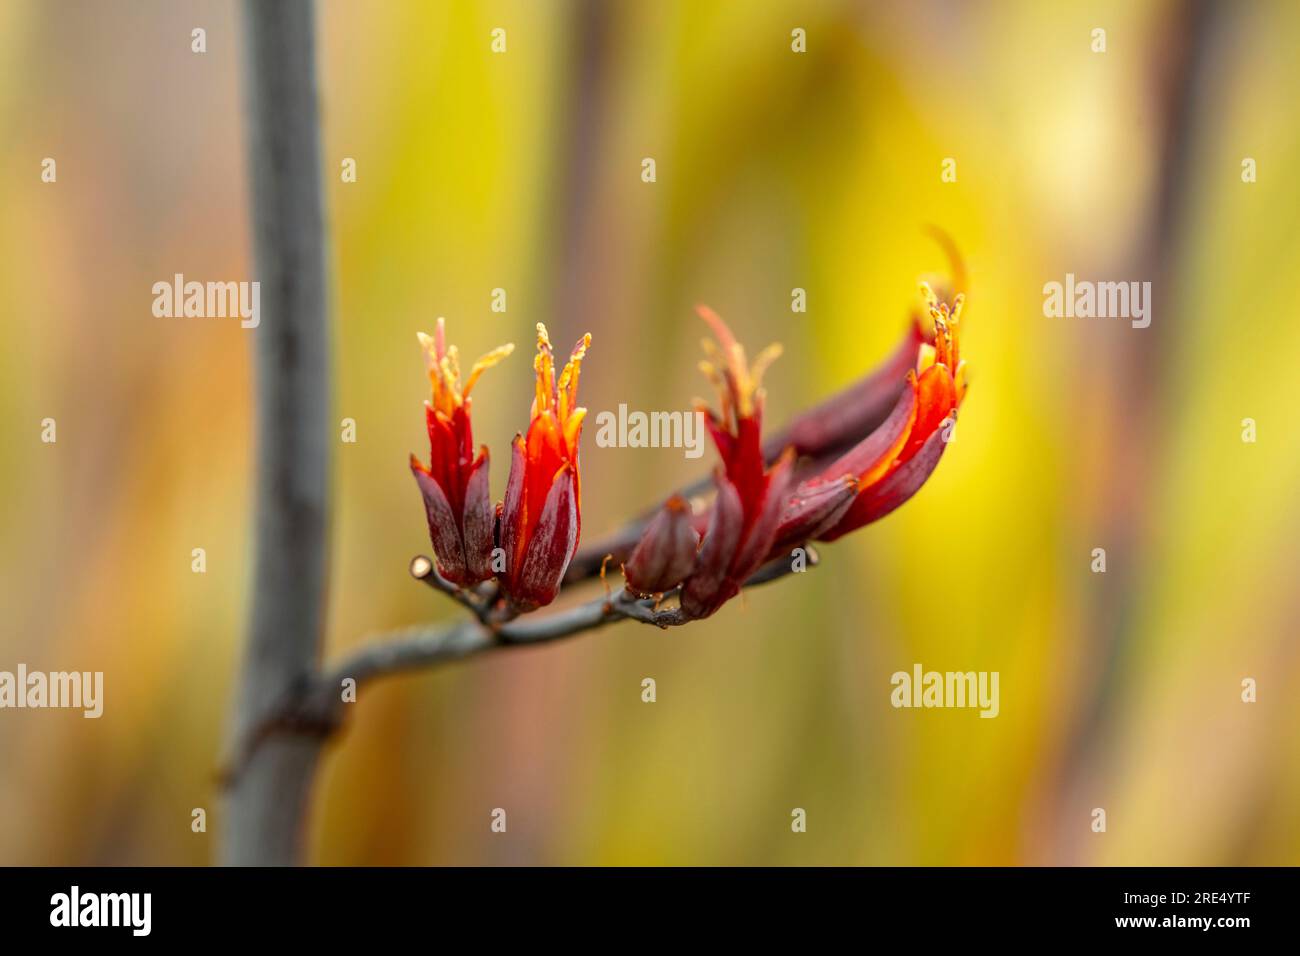 Natural close up flowering plant portrait of Phormium Tenax 'Purpureum Group’, with soft background Stock Photo